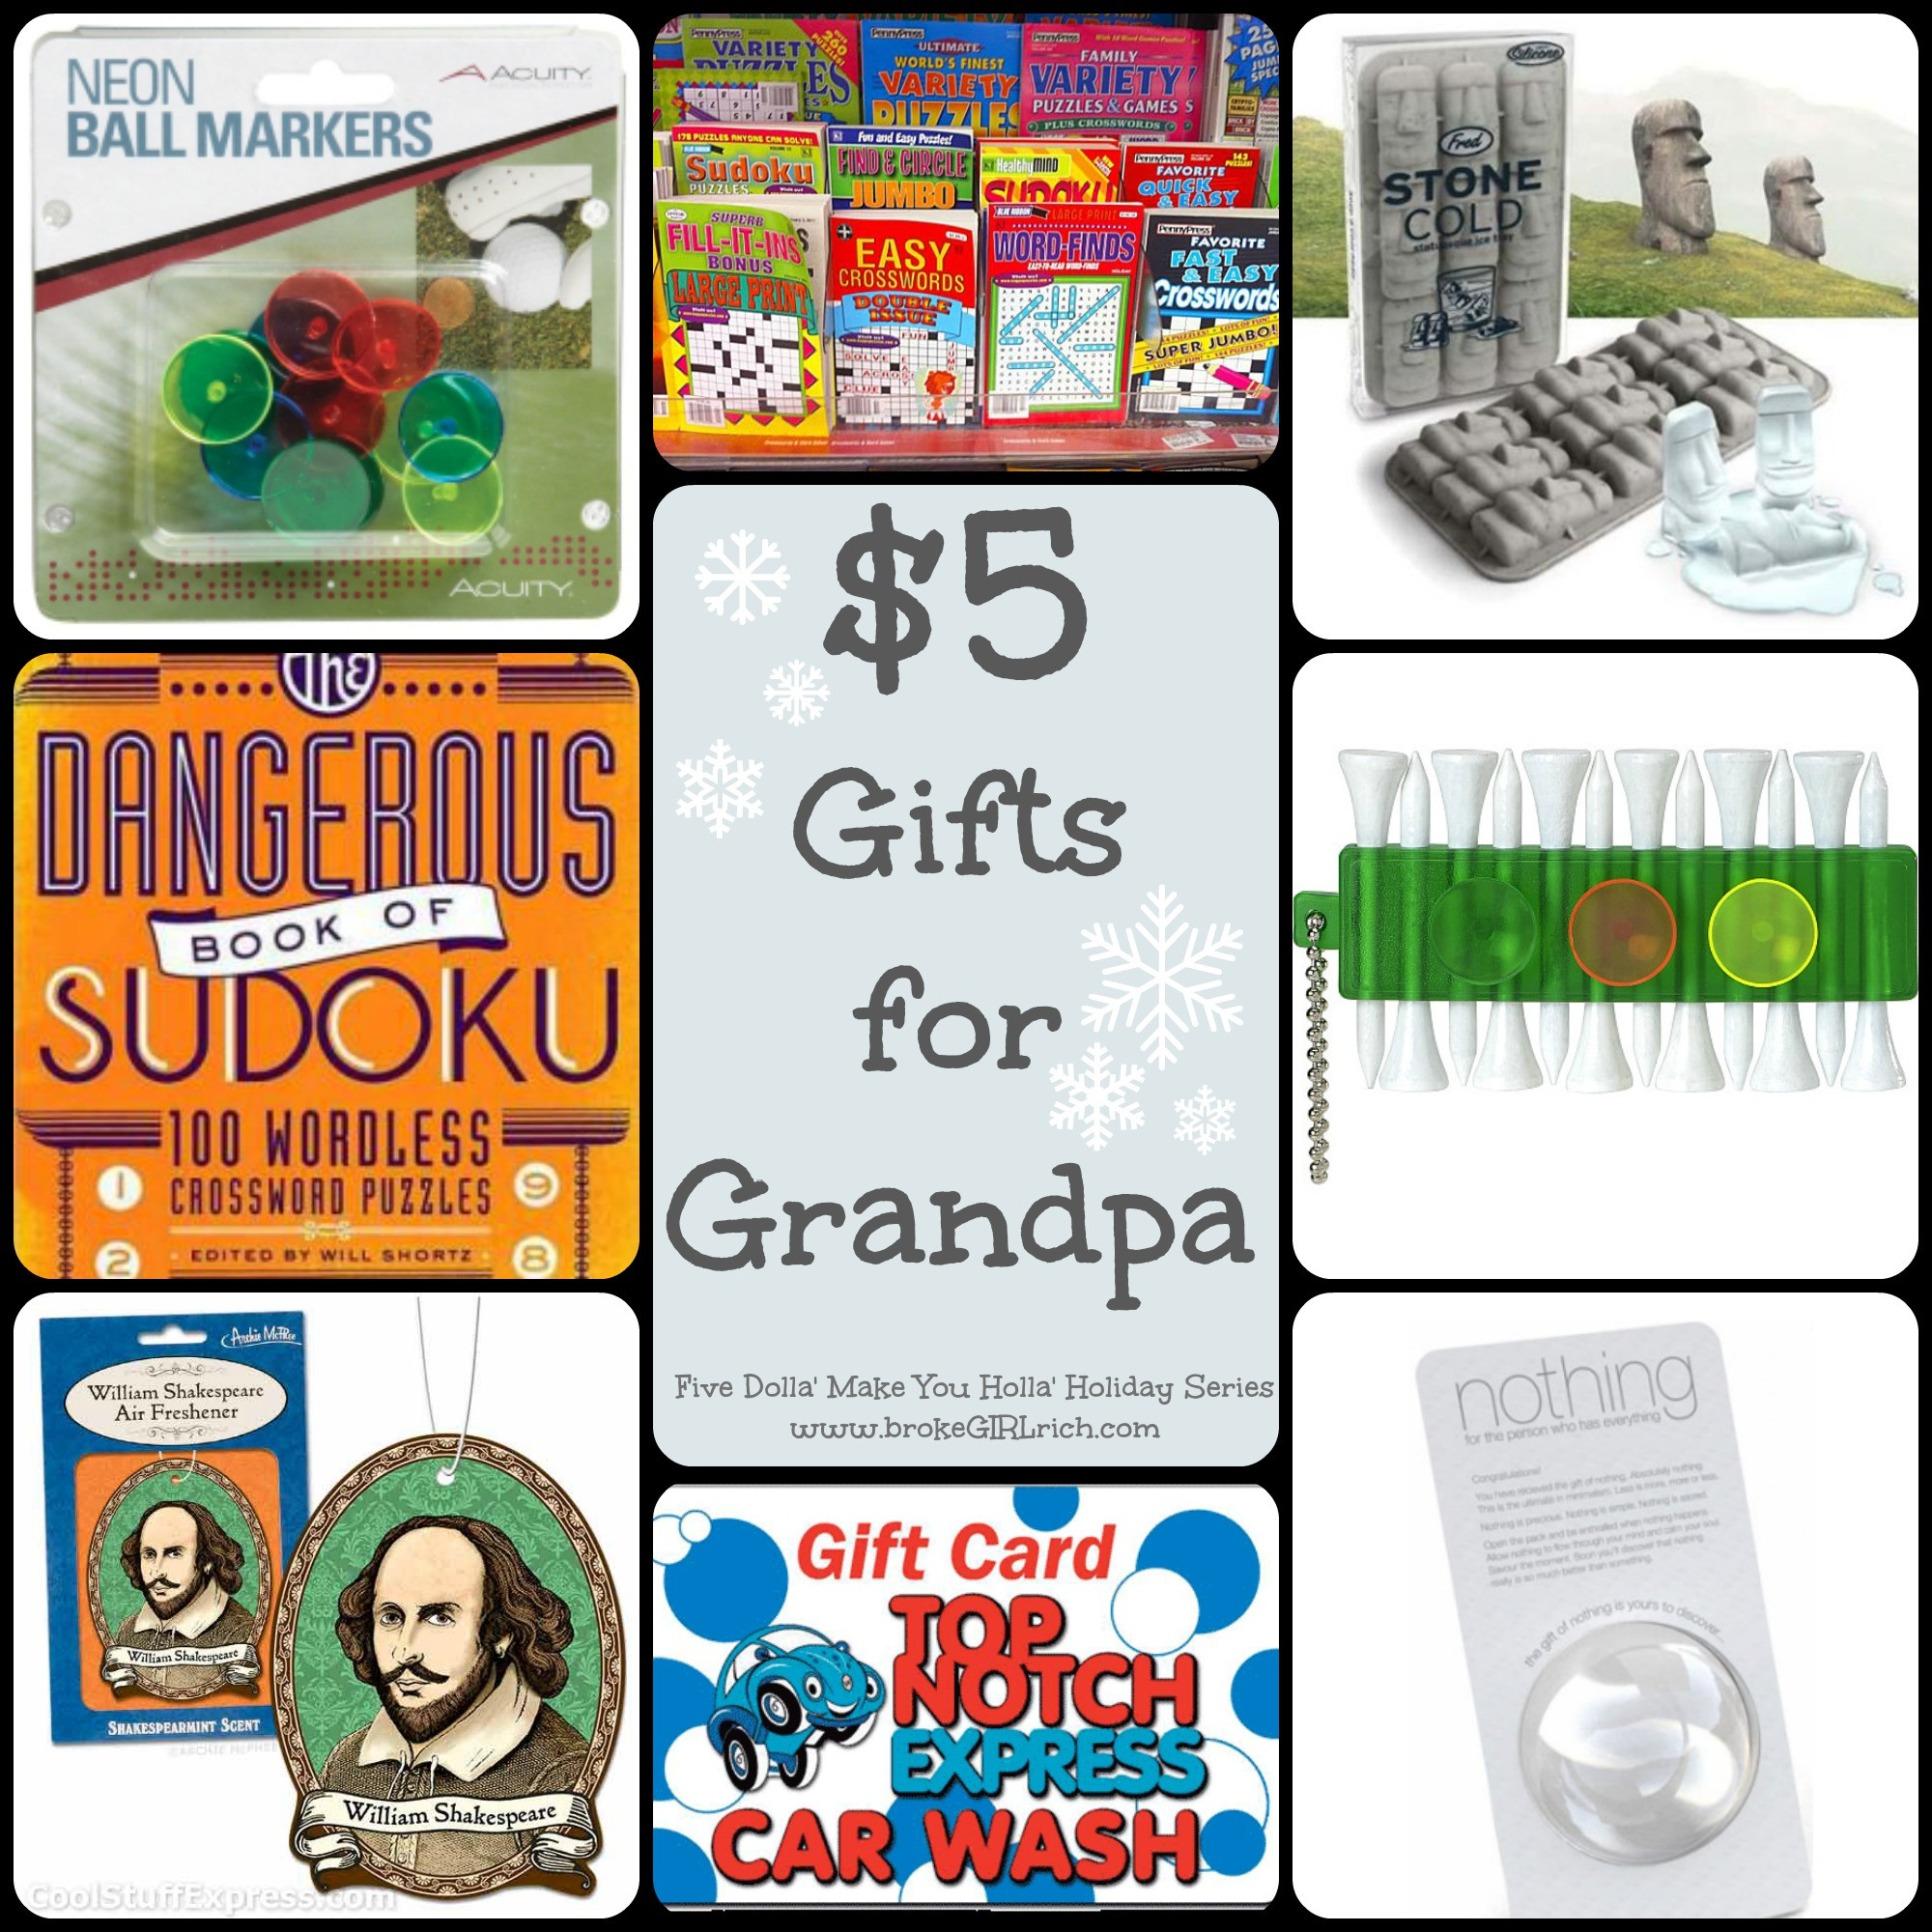 Birthday Gift For Grandpa
 Five Dolla Make You Holla Holiday Series Grandpa